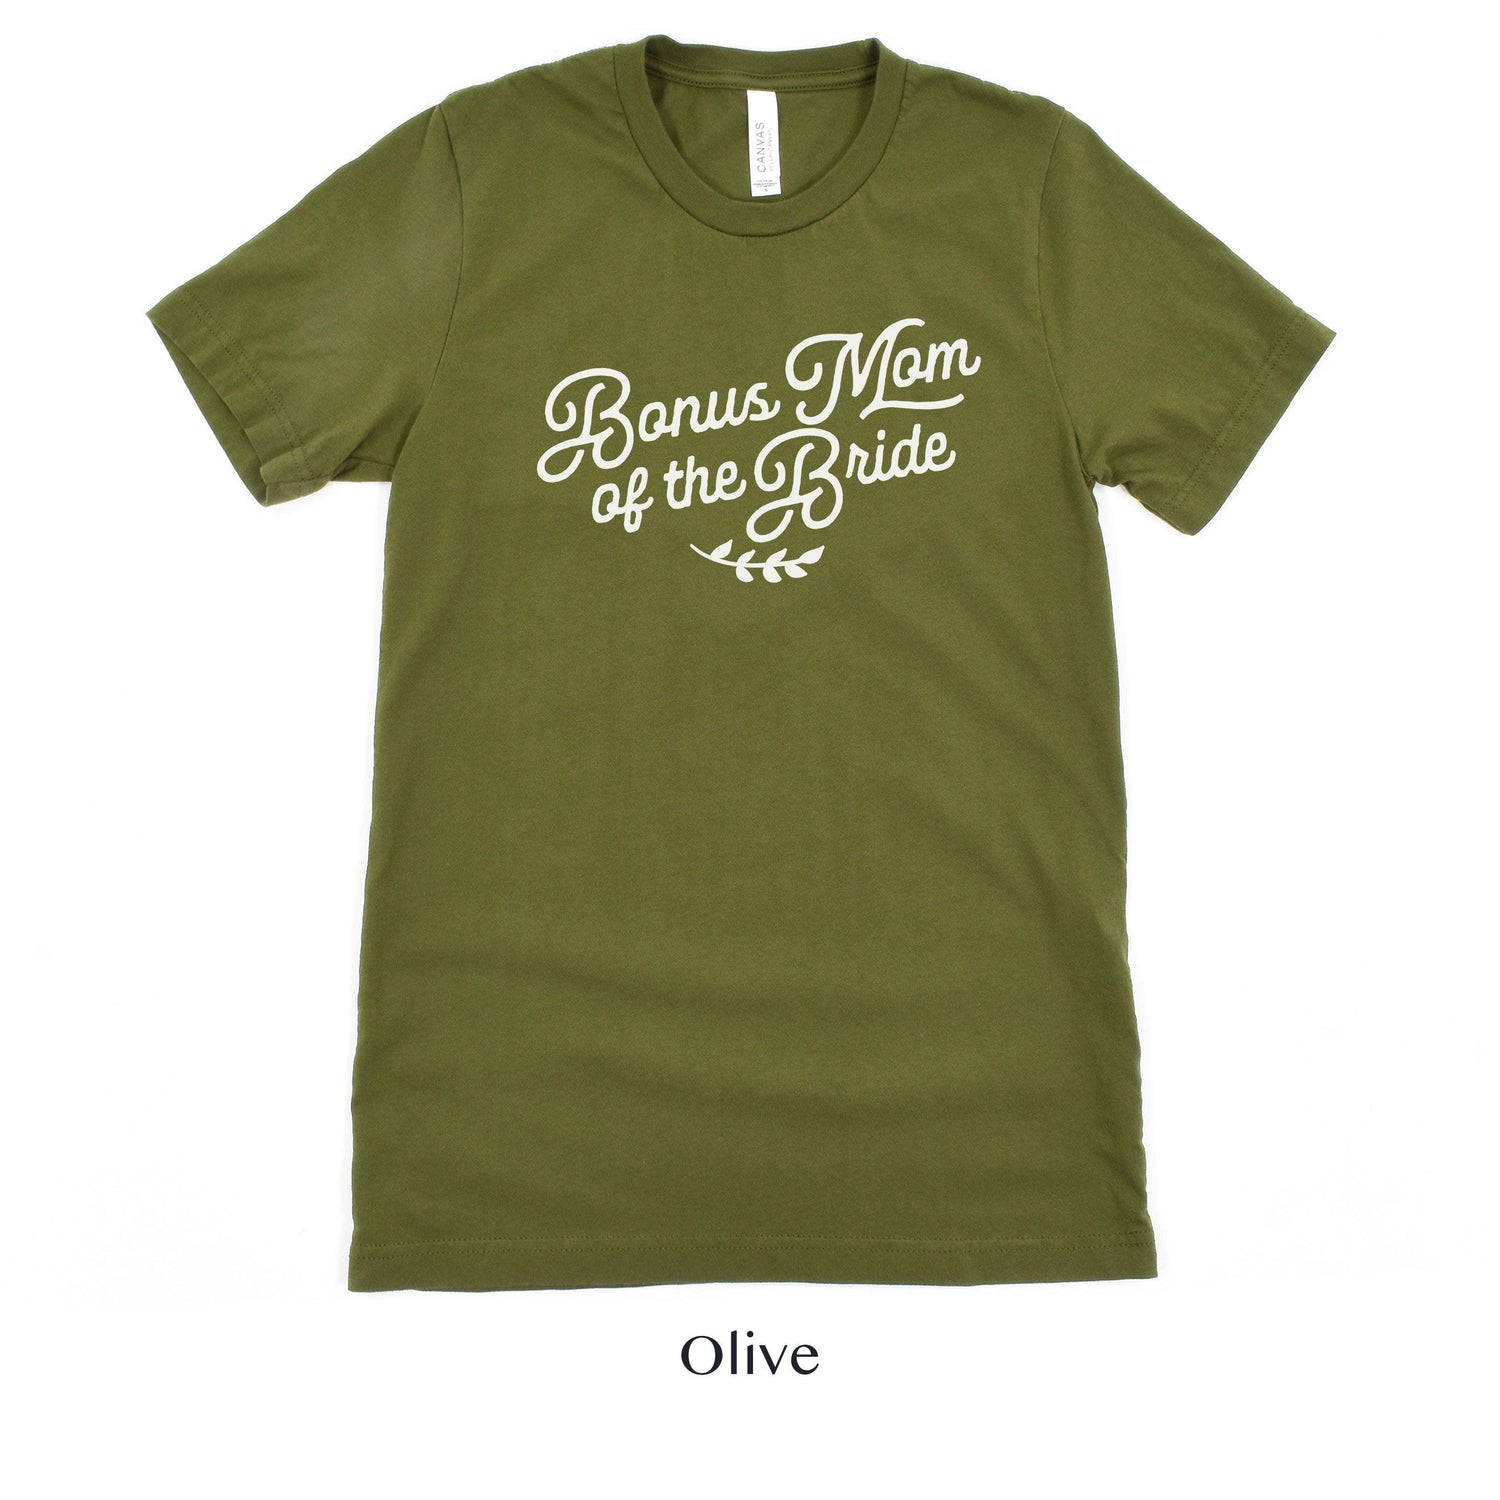 Bonus Mom of the Bride Short-sleeve Tee by Oaklynn Lane - Olive Green Tshirt